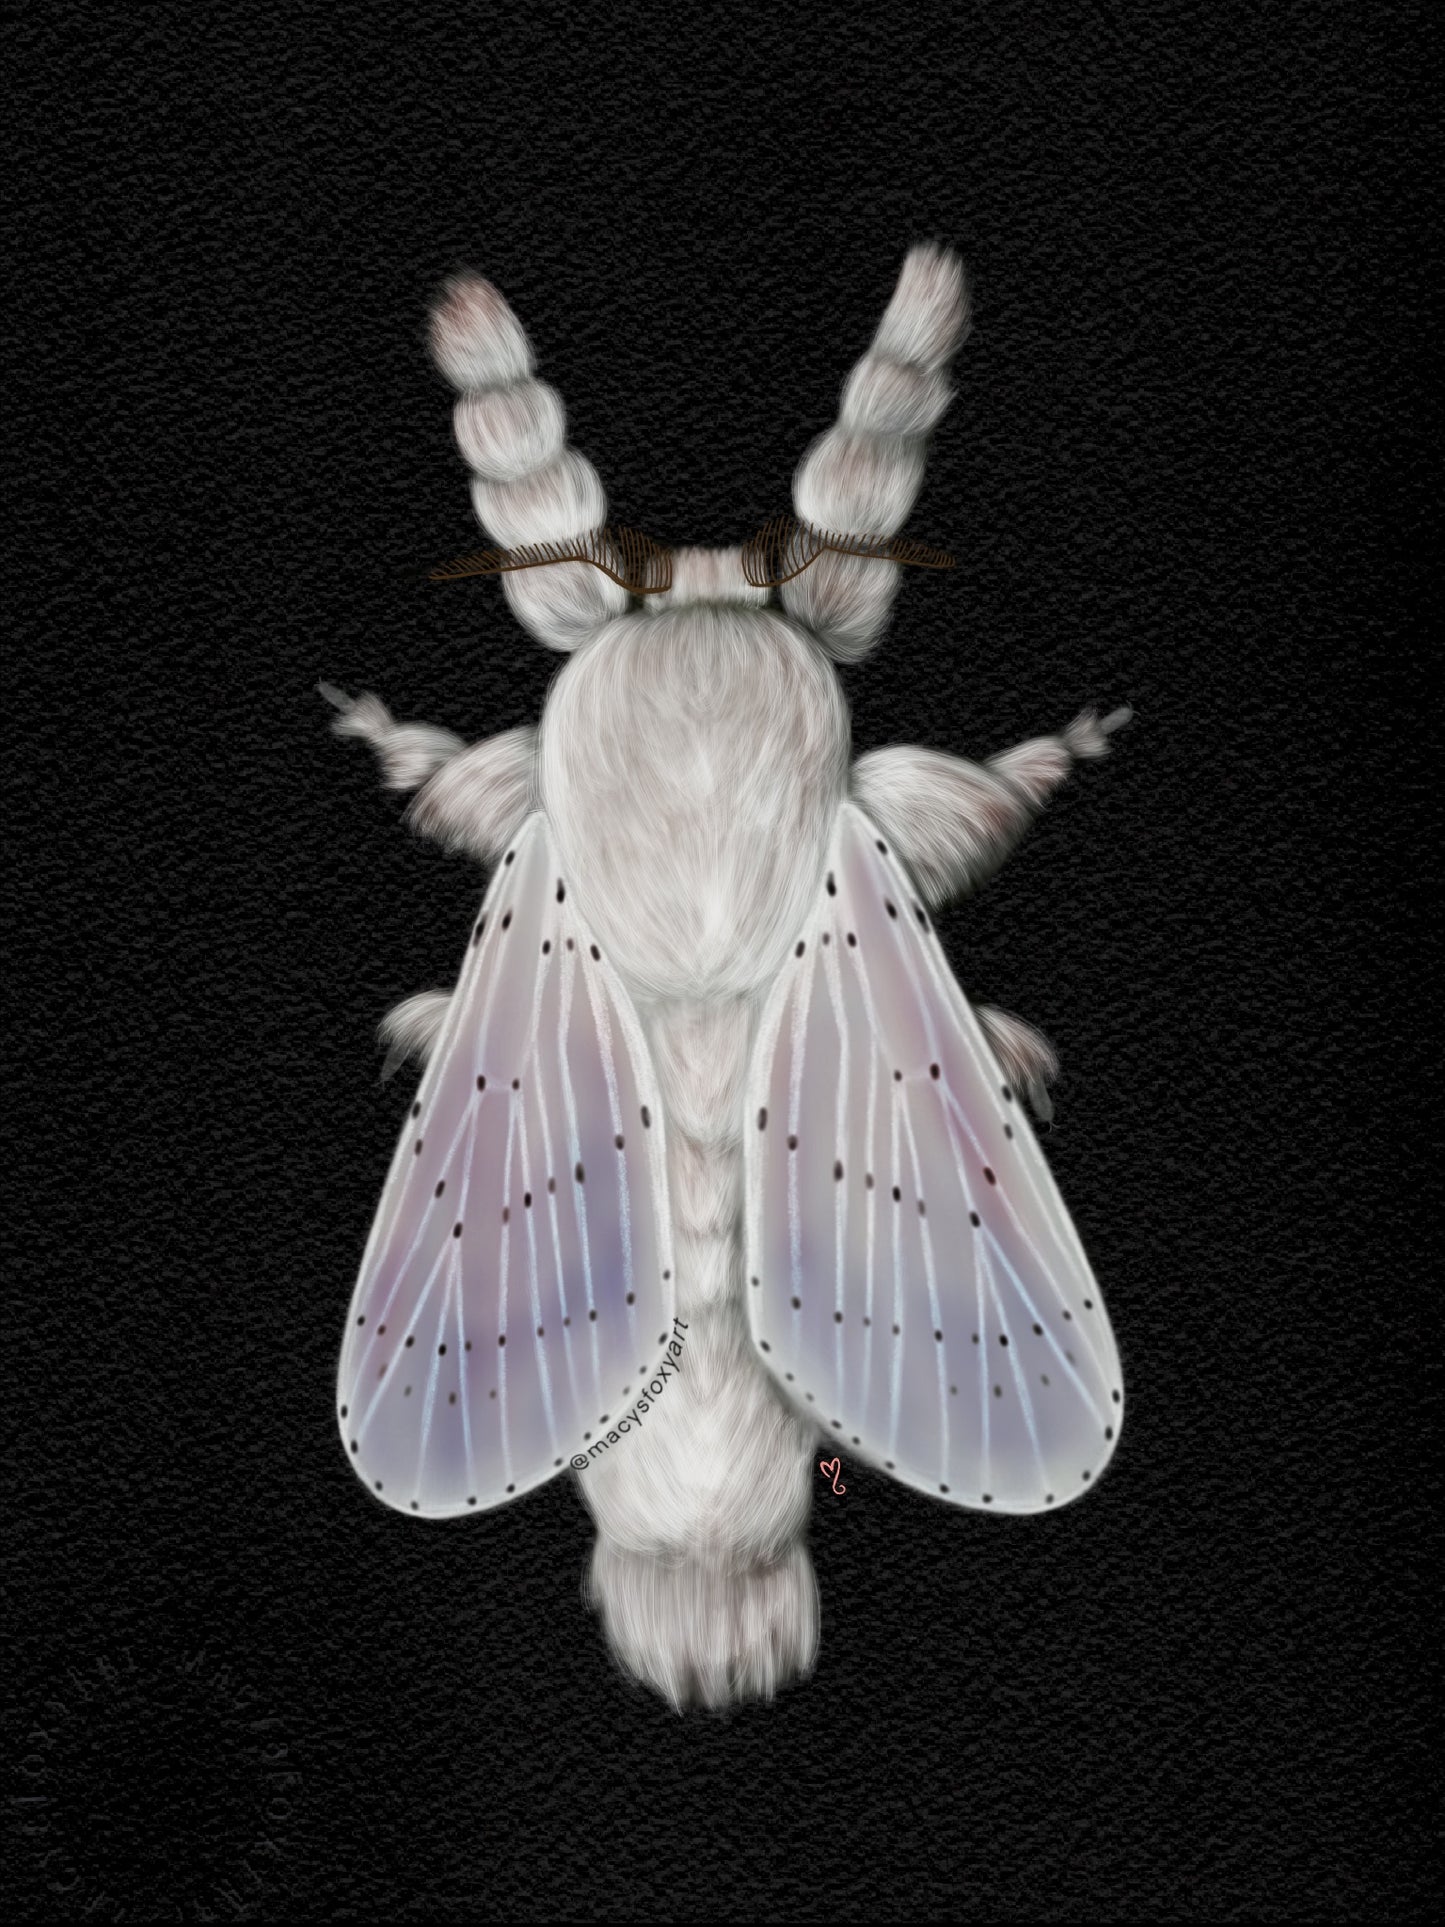 Venezuelan Poodle Moth - Giclee fine art prints